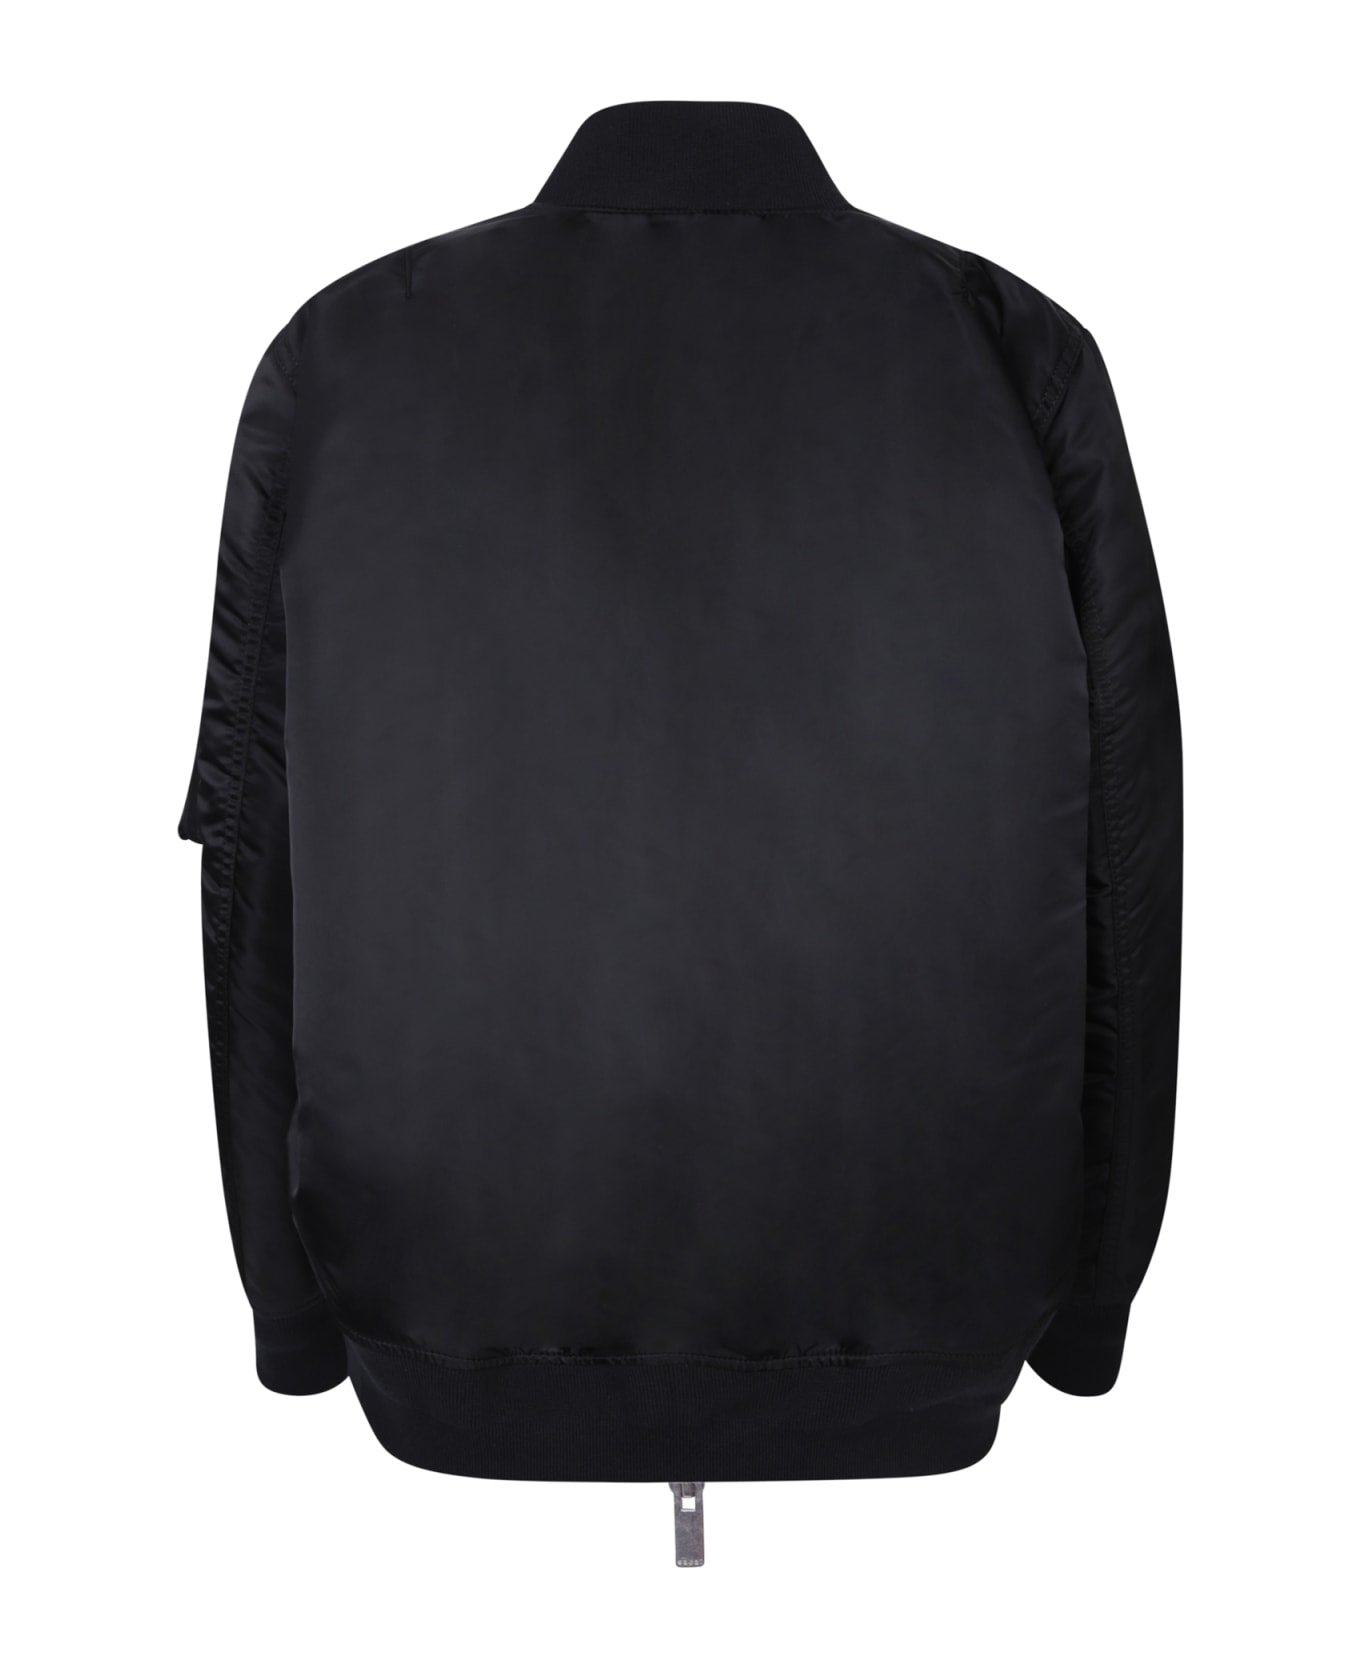 Sacai Detachable Sleeve Black Bomber Jacket - Black